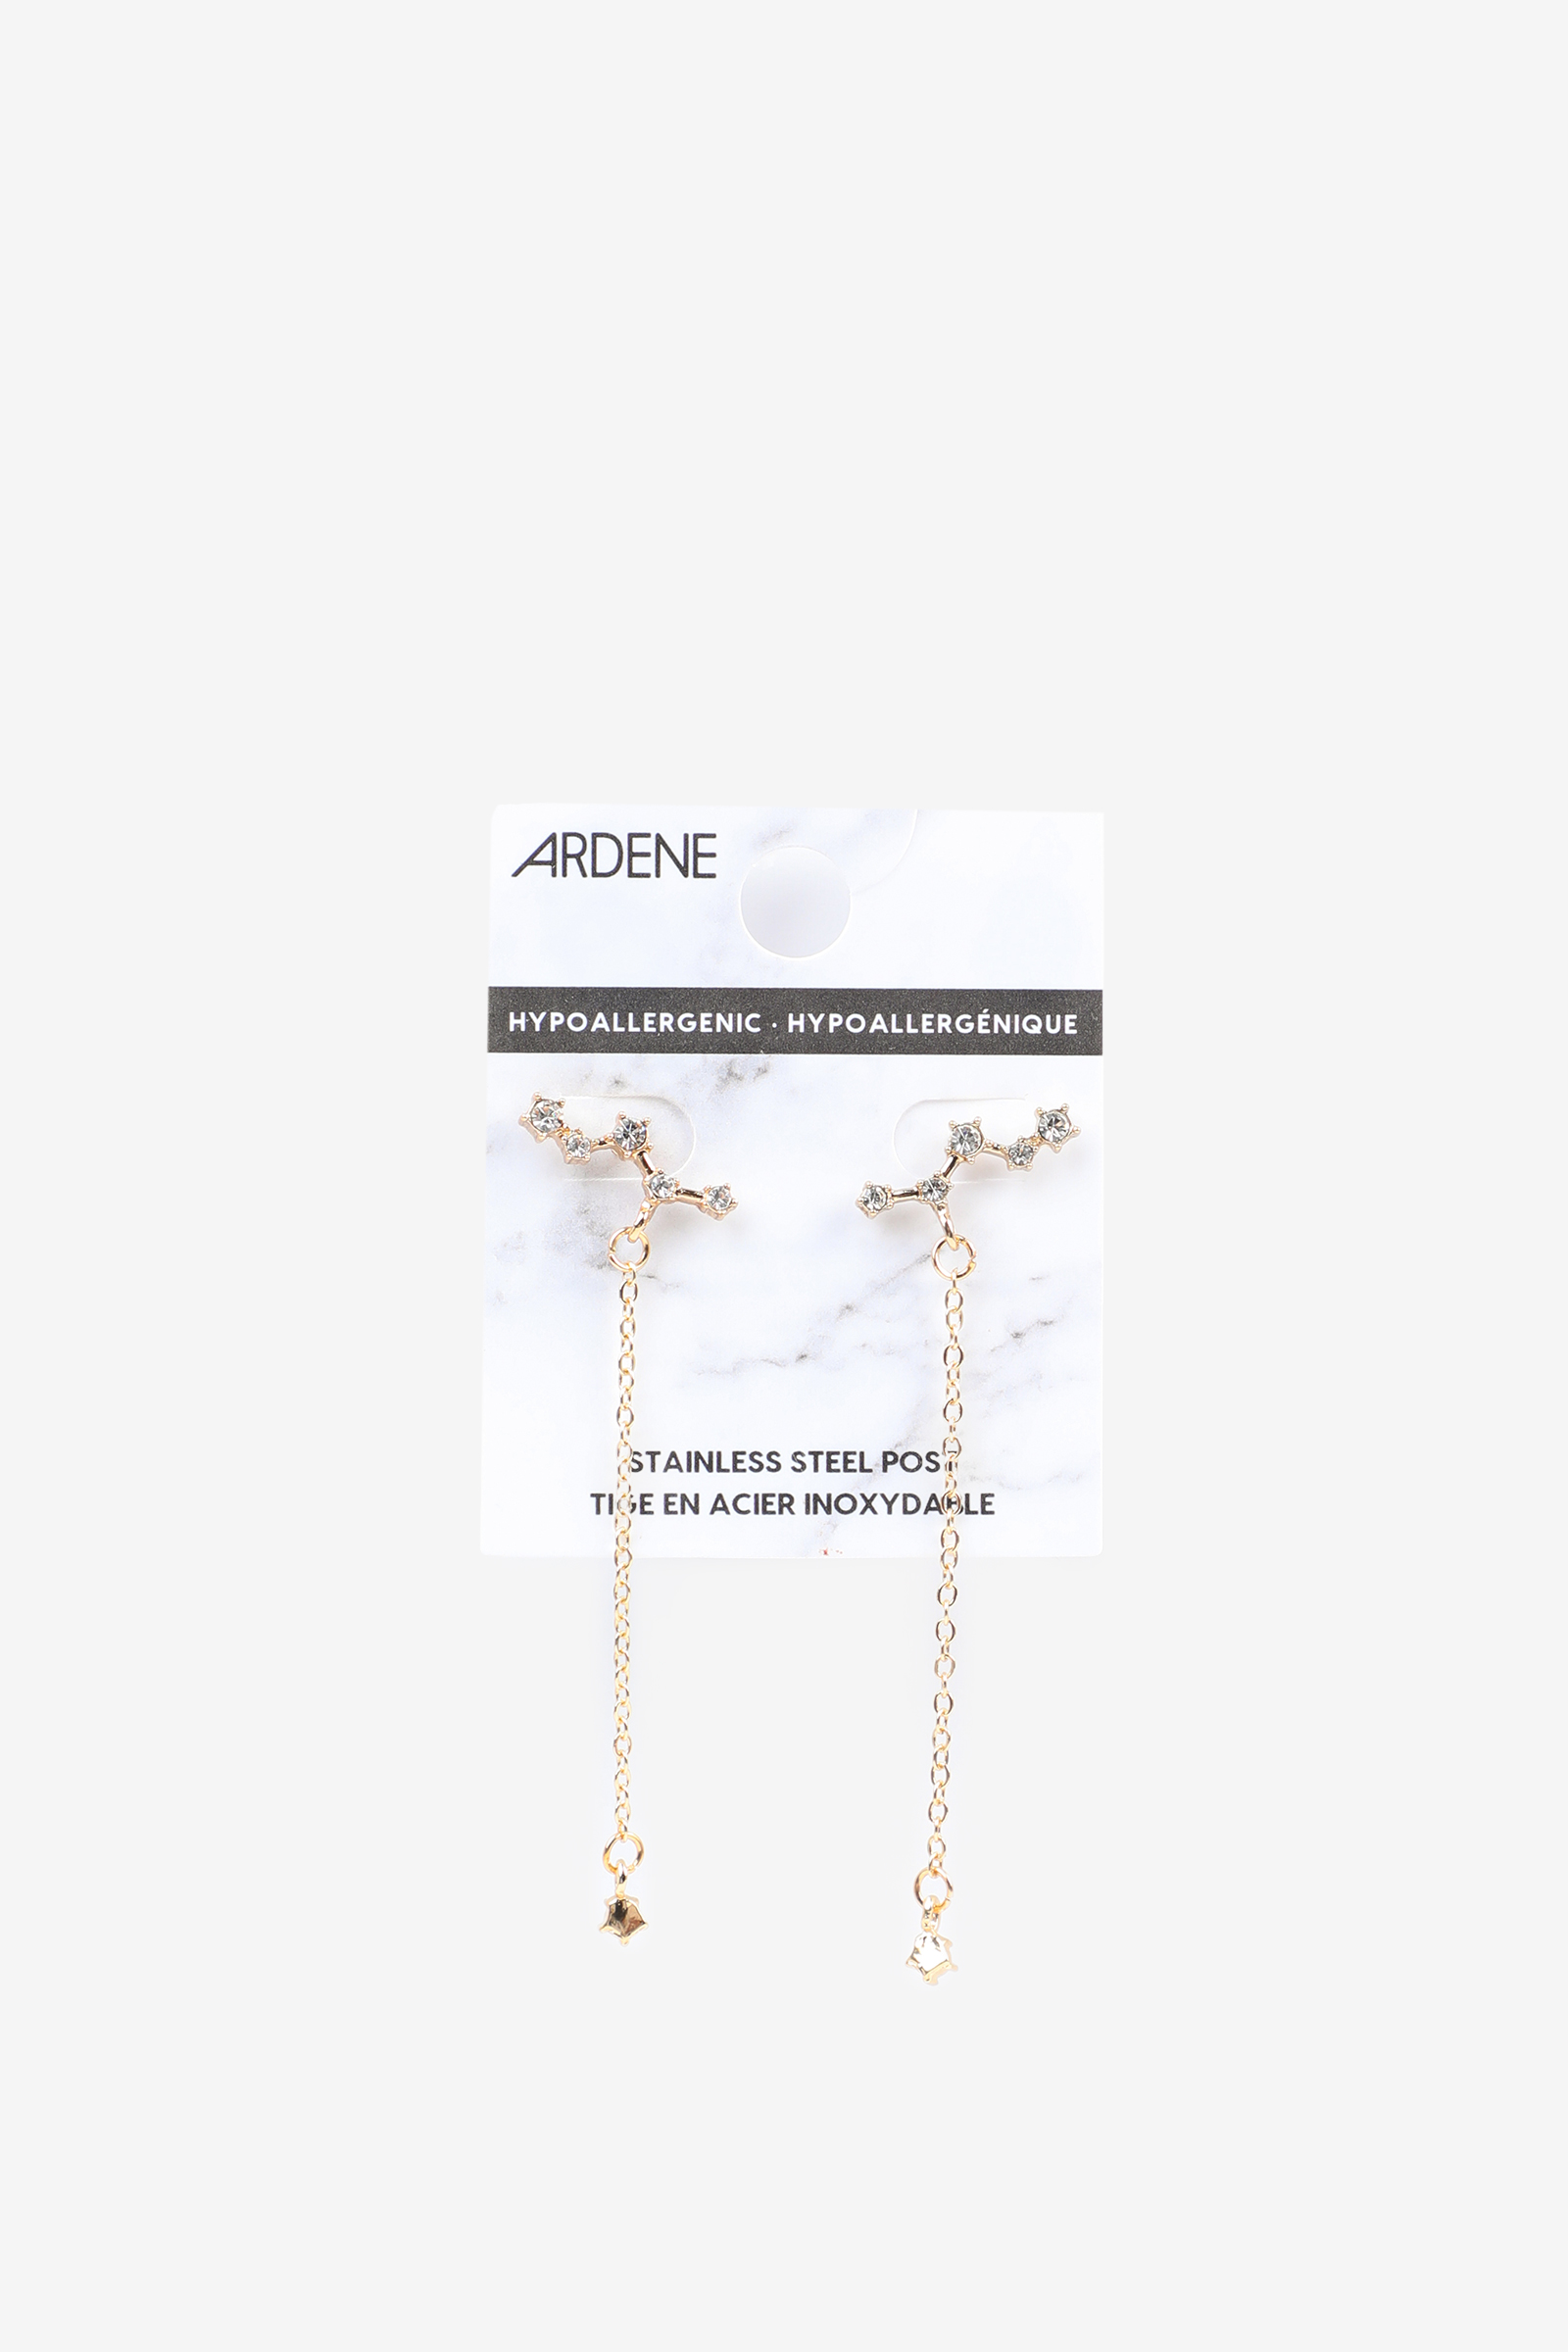 Ardene Rhinestone Constellation Earrings in Gold | Stainless Steel